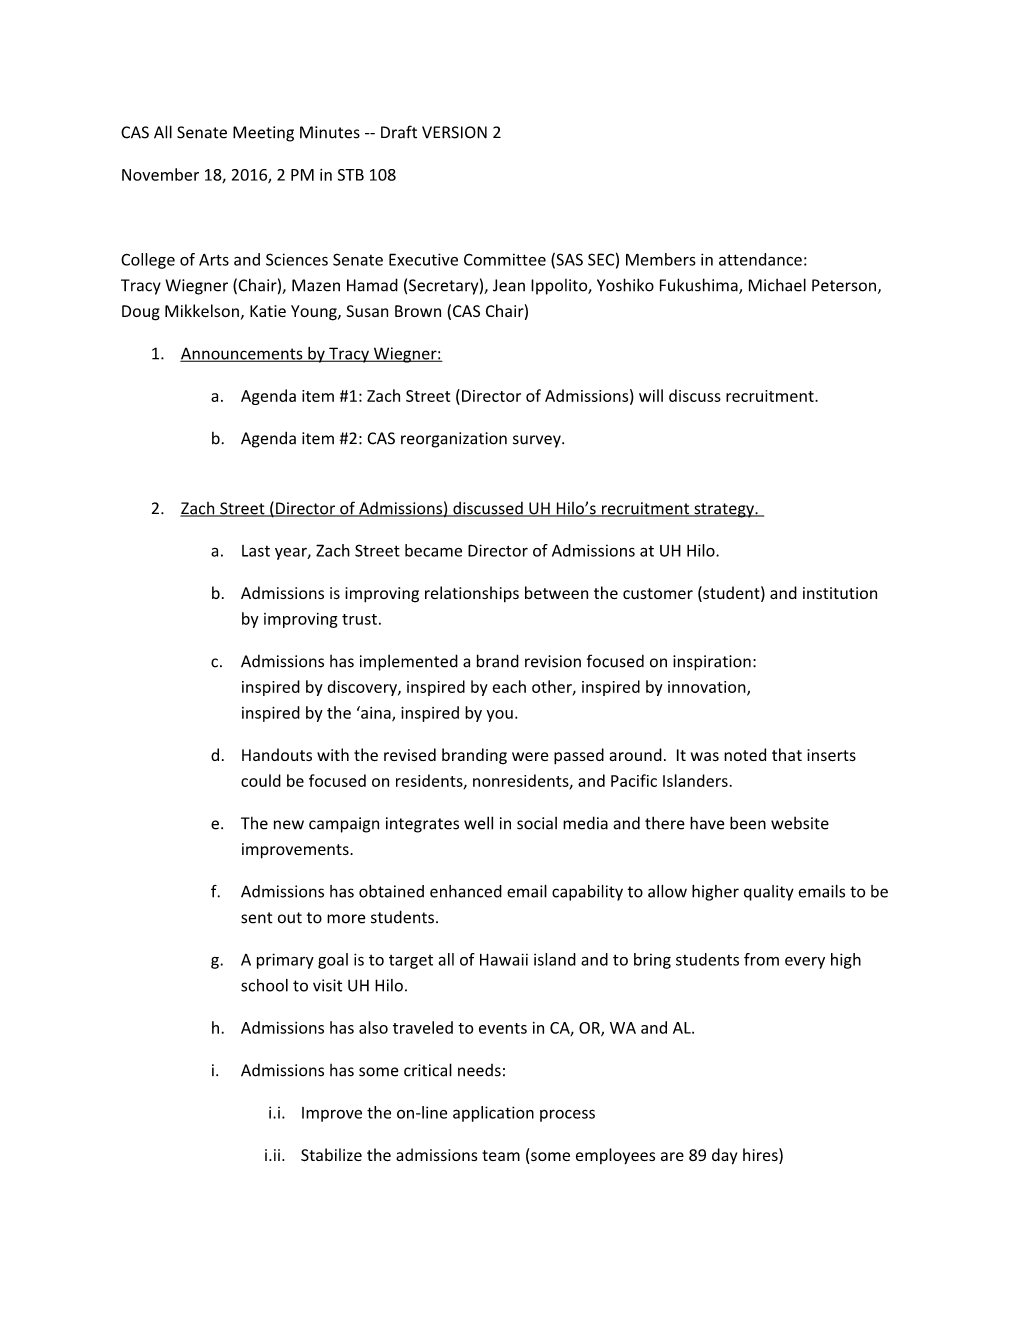 CAS All Senate Meeting Minutes Draft VERSION 2